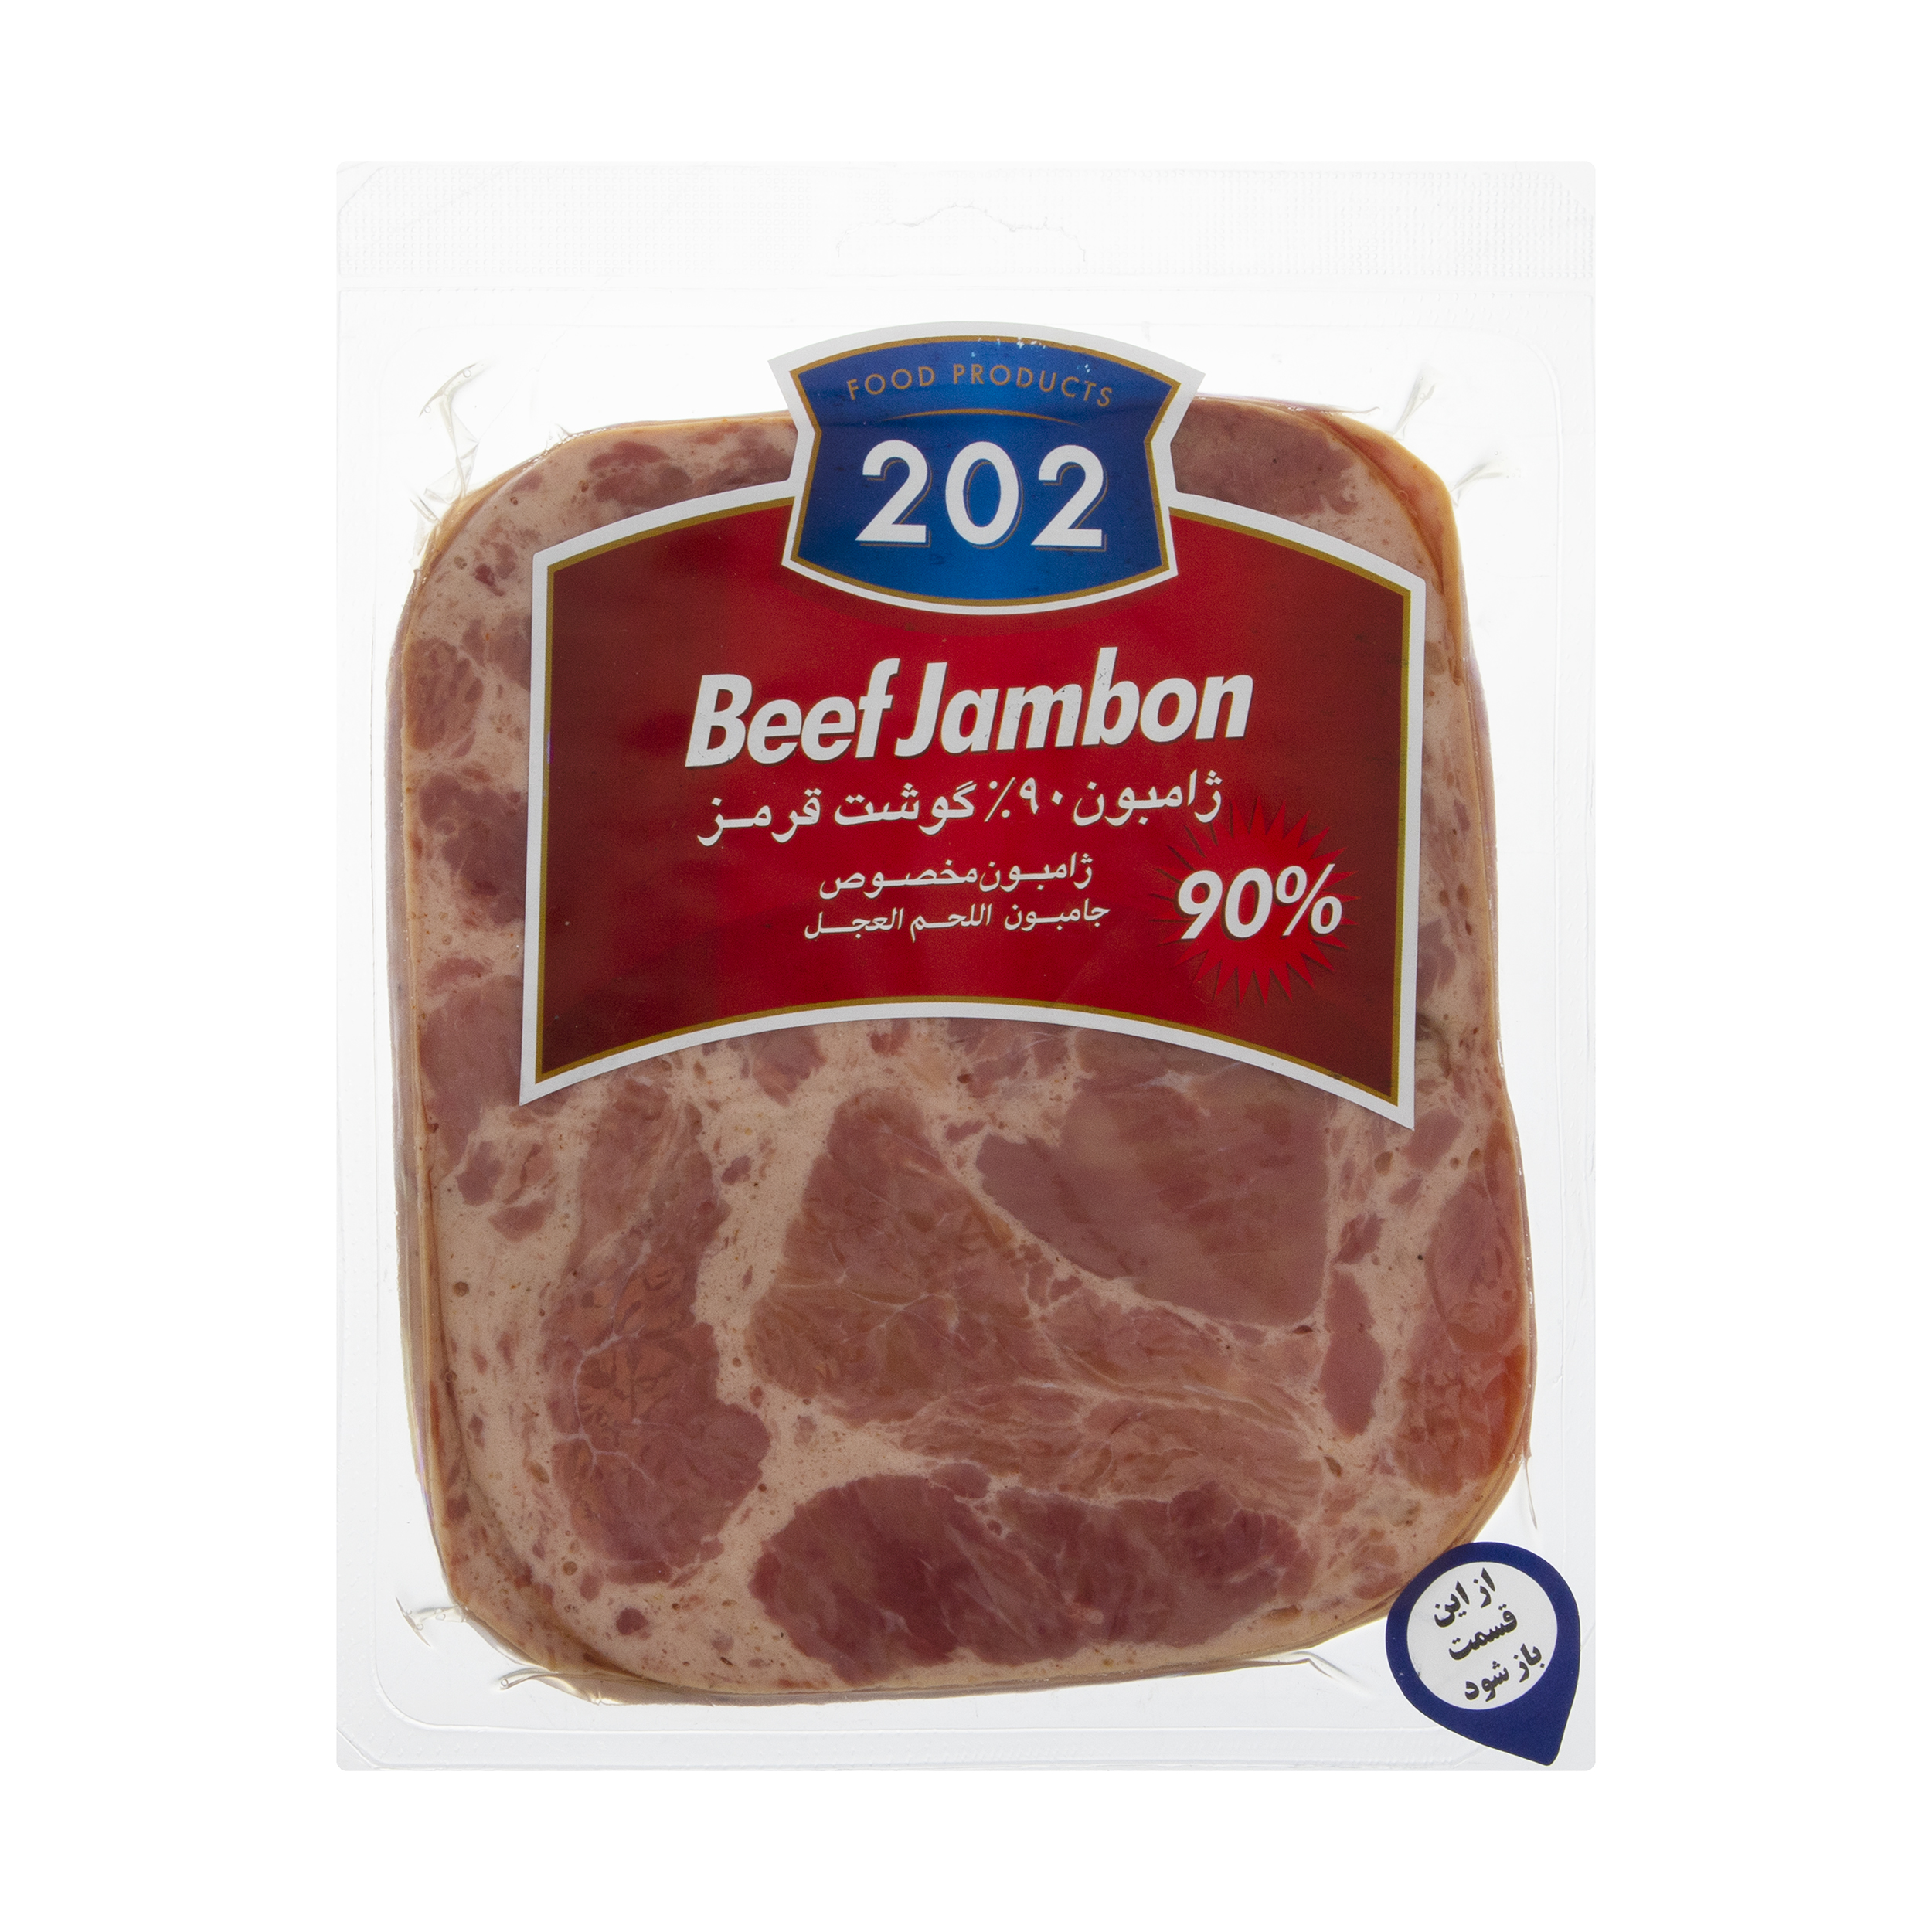 ژامبون گوشت 90 درصد 202 وزن 300 گرم